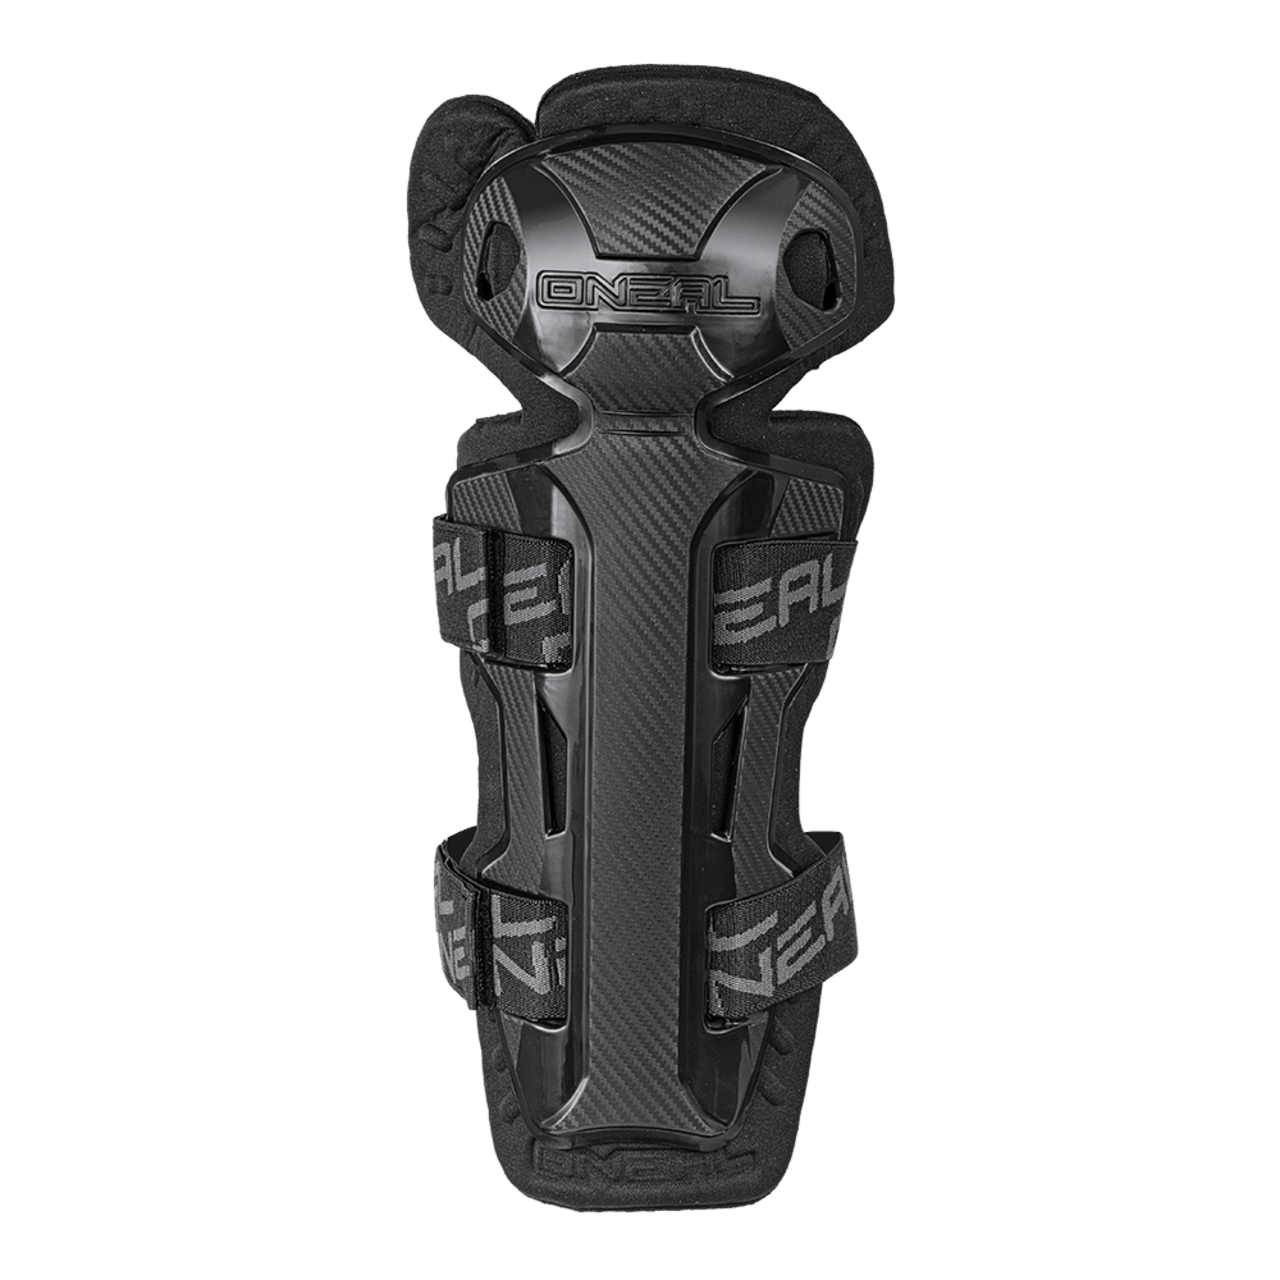 Велозащита Колена-Голени O´Neal Pro II RL Carbon Look Knee Cups, черный, 2017, Вариант УТ-00156779: Размер: XS/S, изображение  - НаВелосипеде.рф